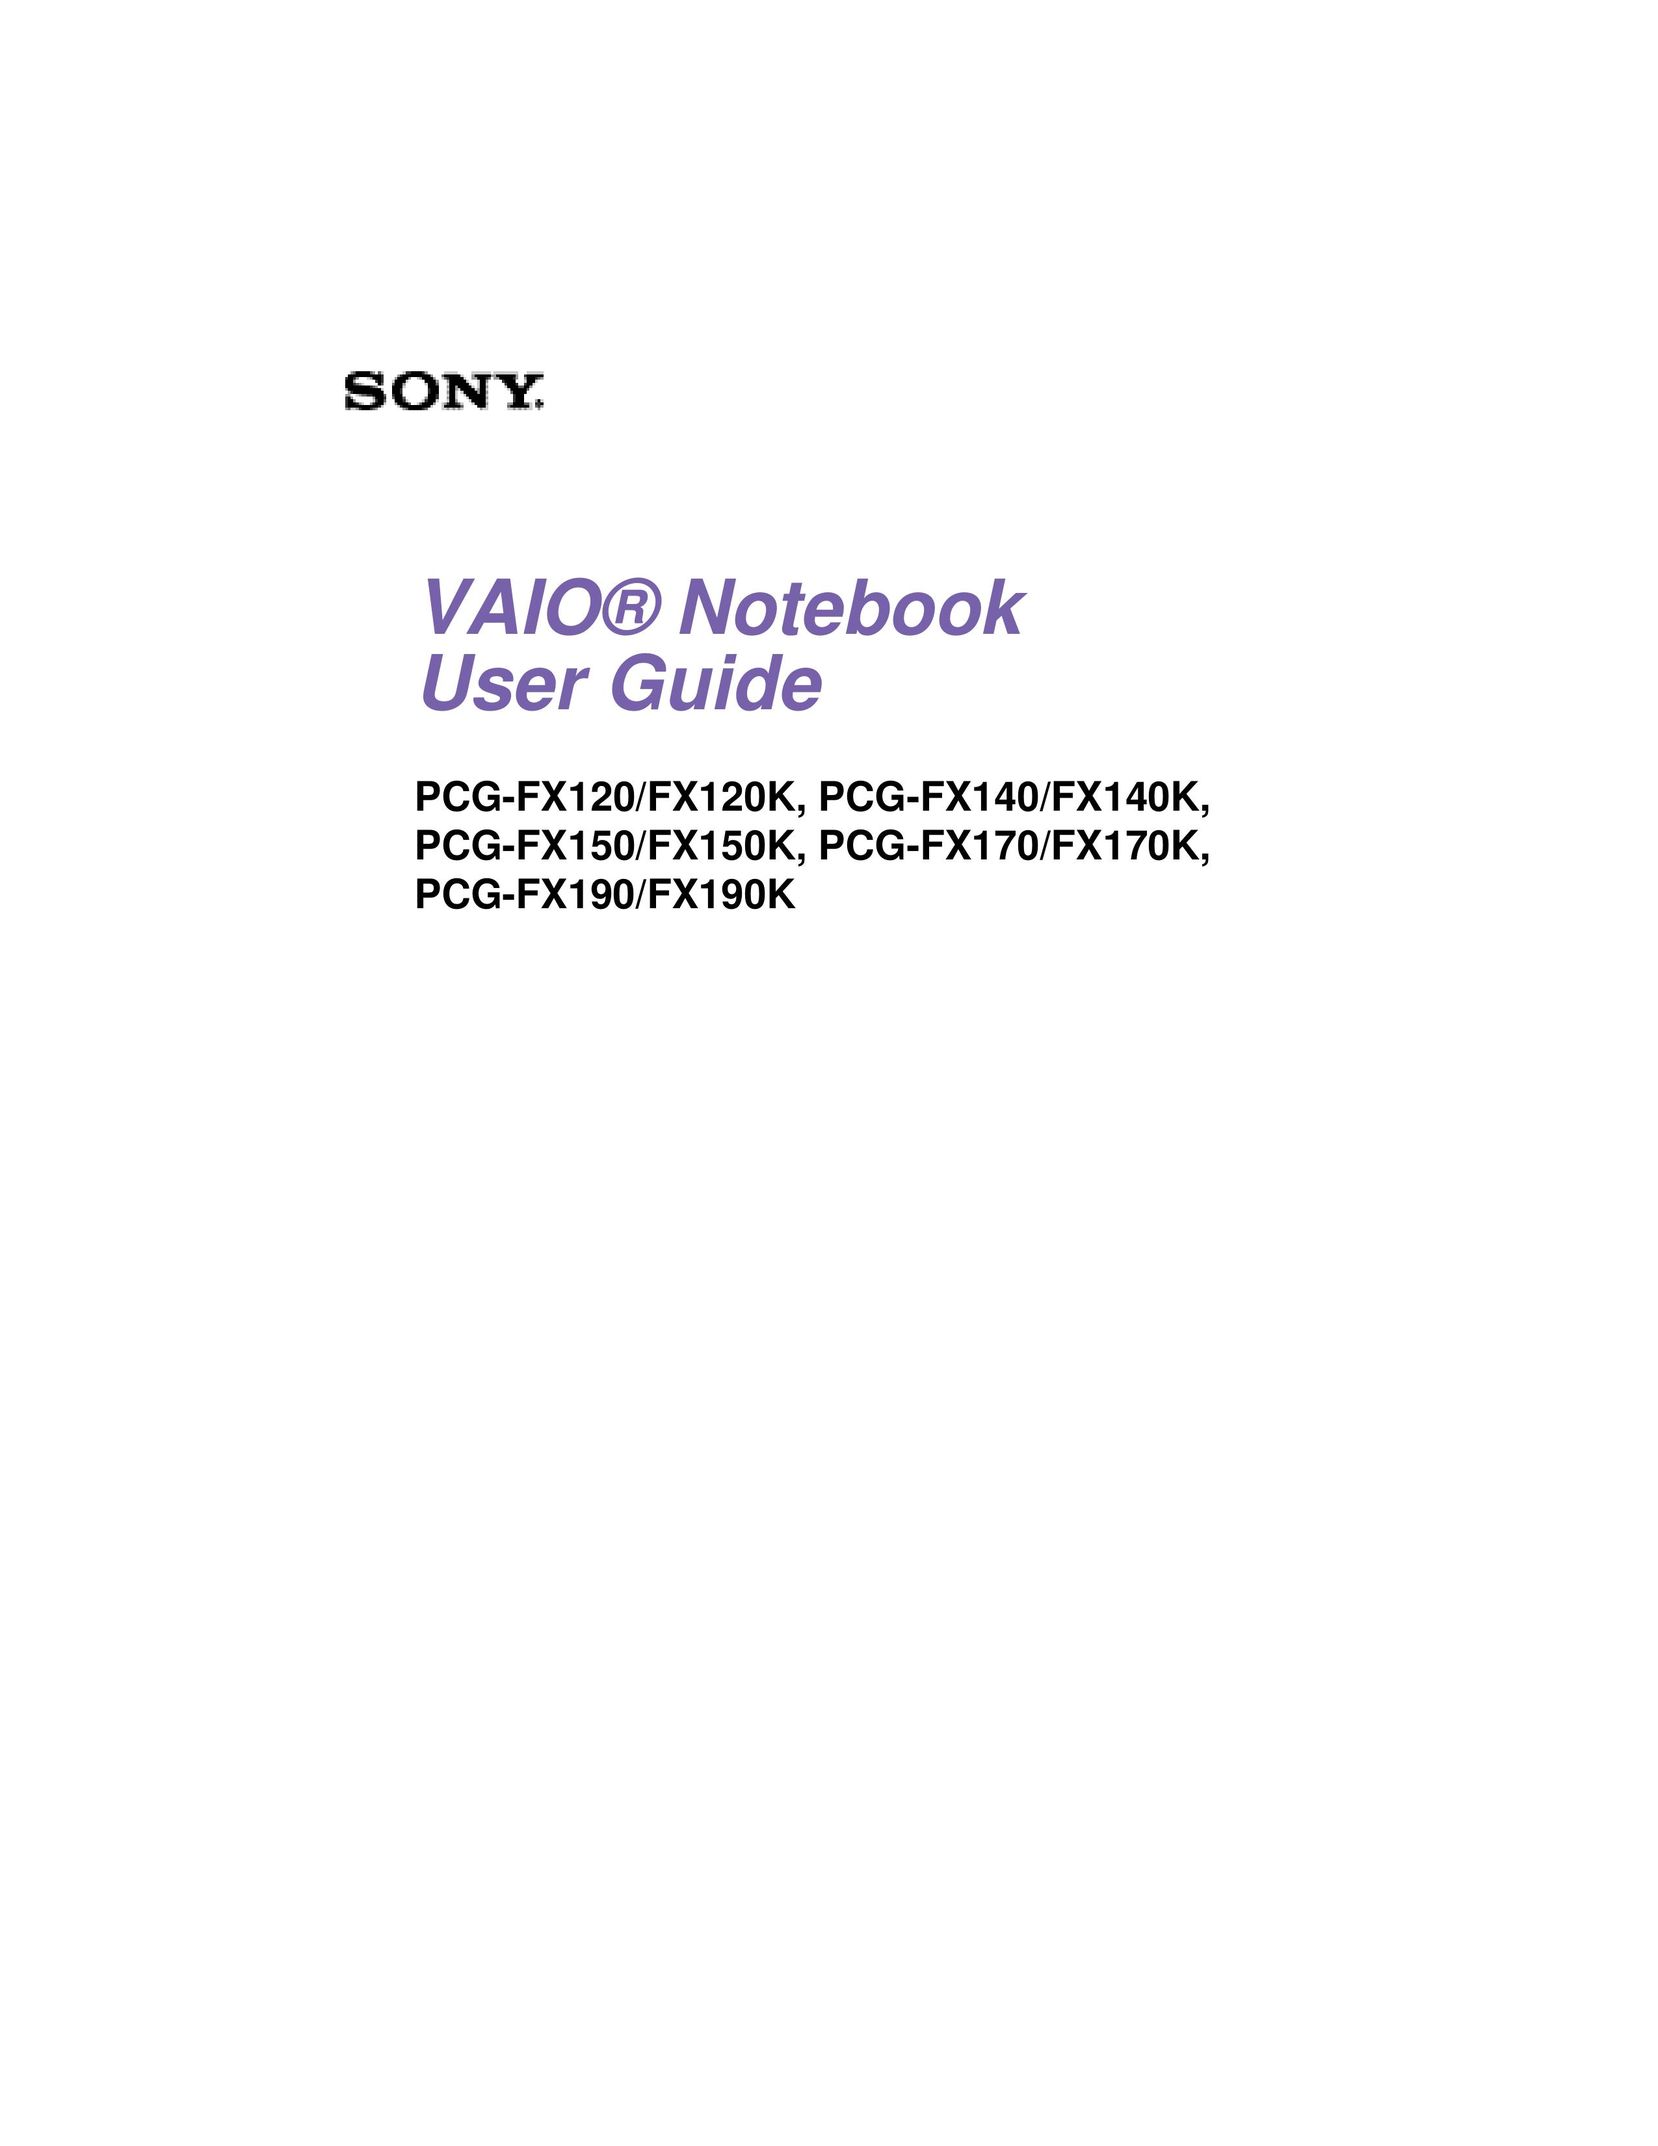 Sony CG-FX120K Laptop User Manual